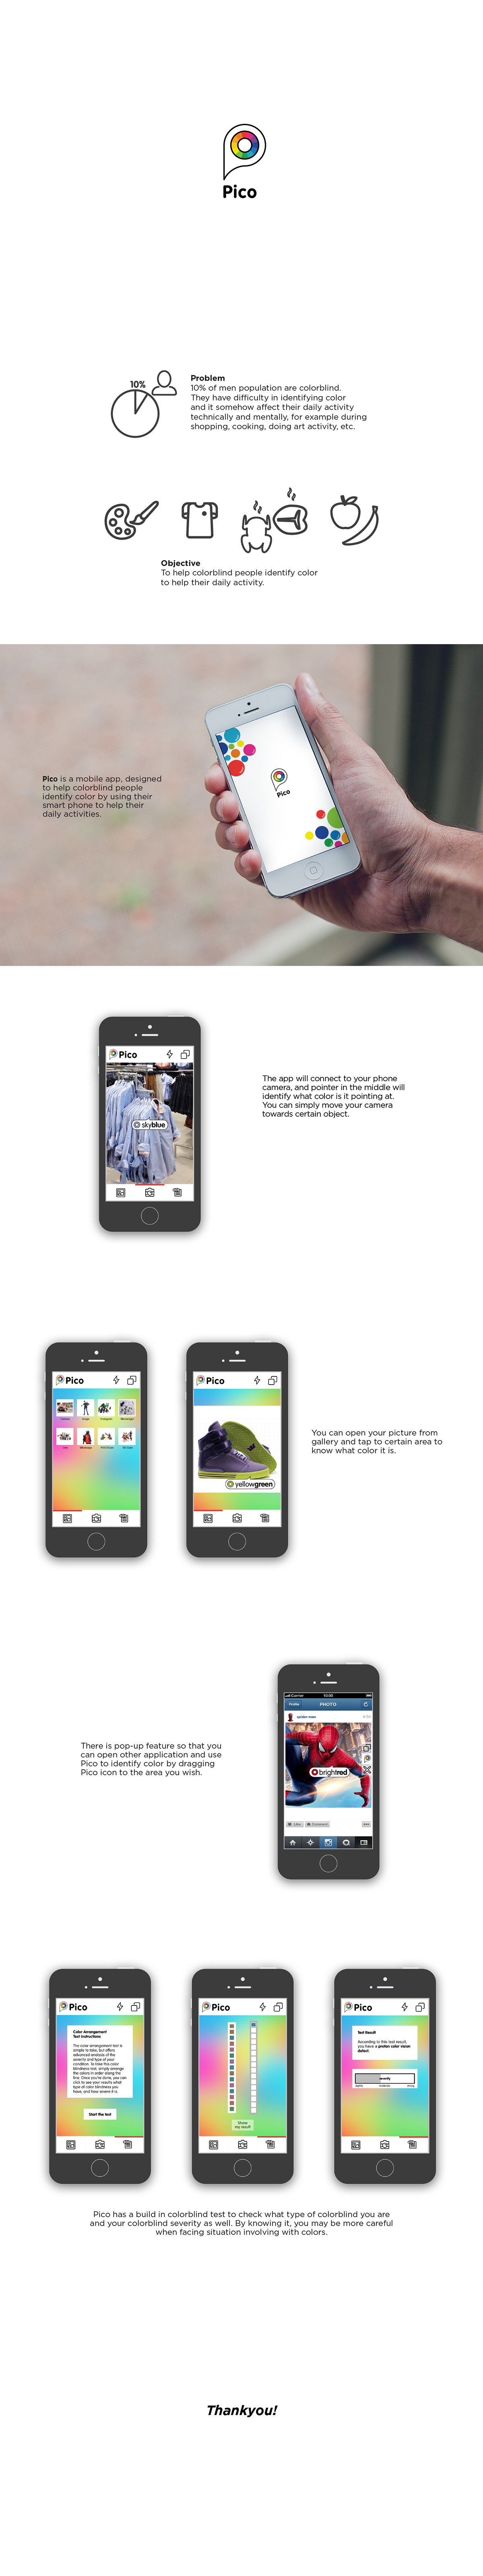 UI ux mobile app apps phone application interactive color colour blind apps design Interface design user